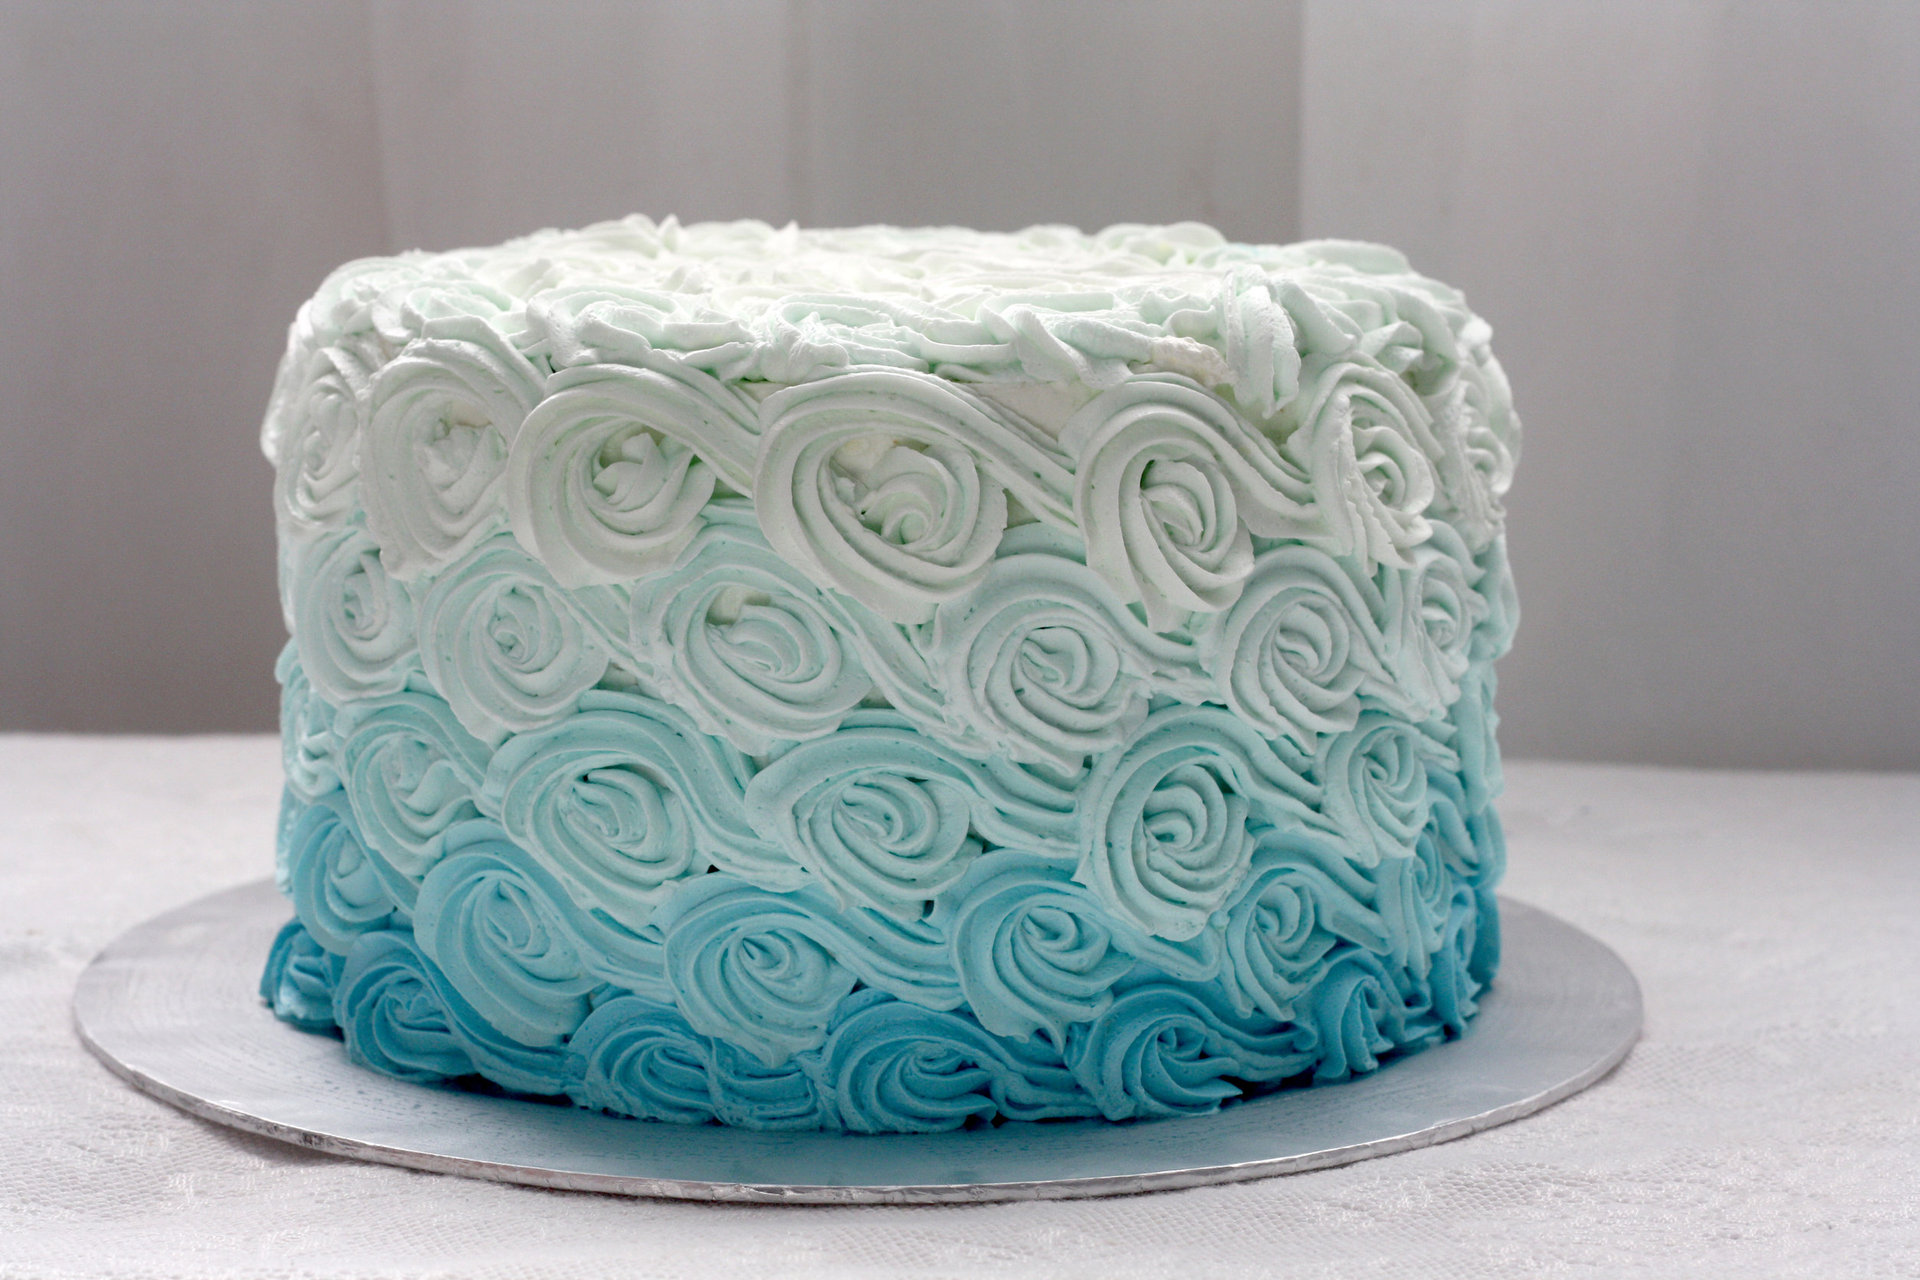 Happy Birthday Mum! - Decorated Cake by Kerri's Cakes - CakesDecor